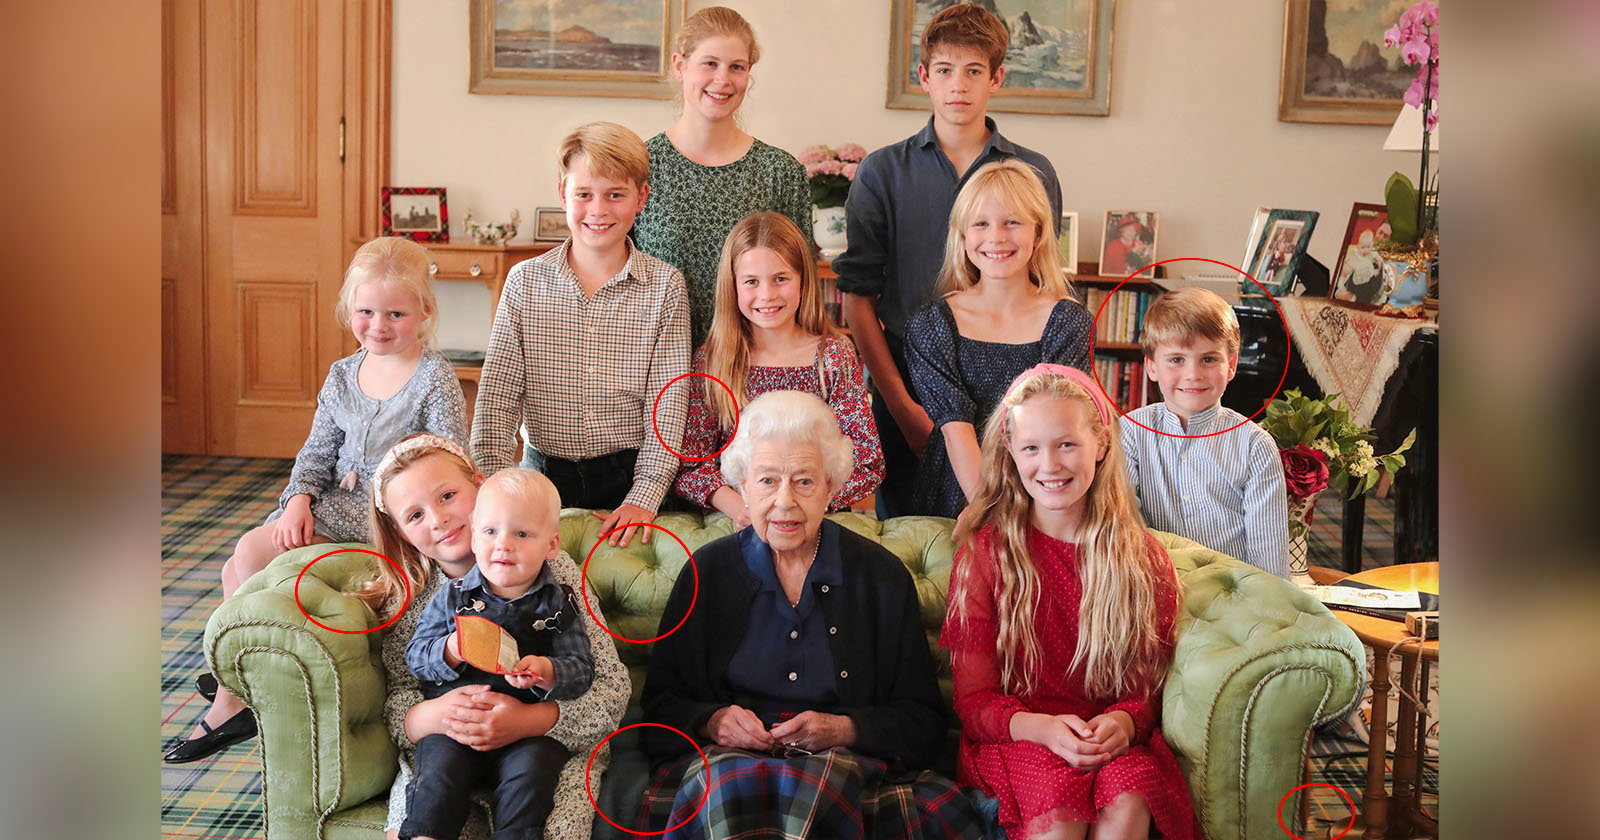 Digitally manipulated photo of Queen and Grandchildren